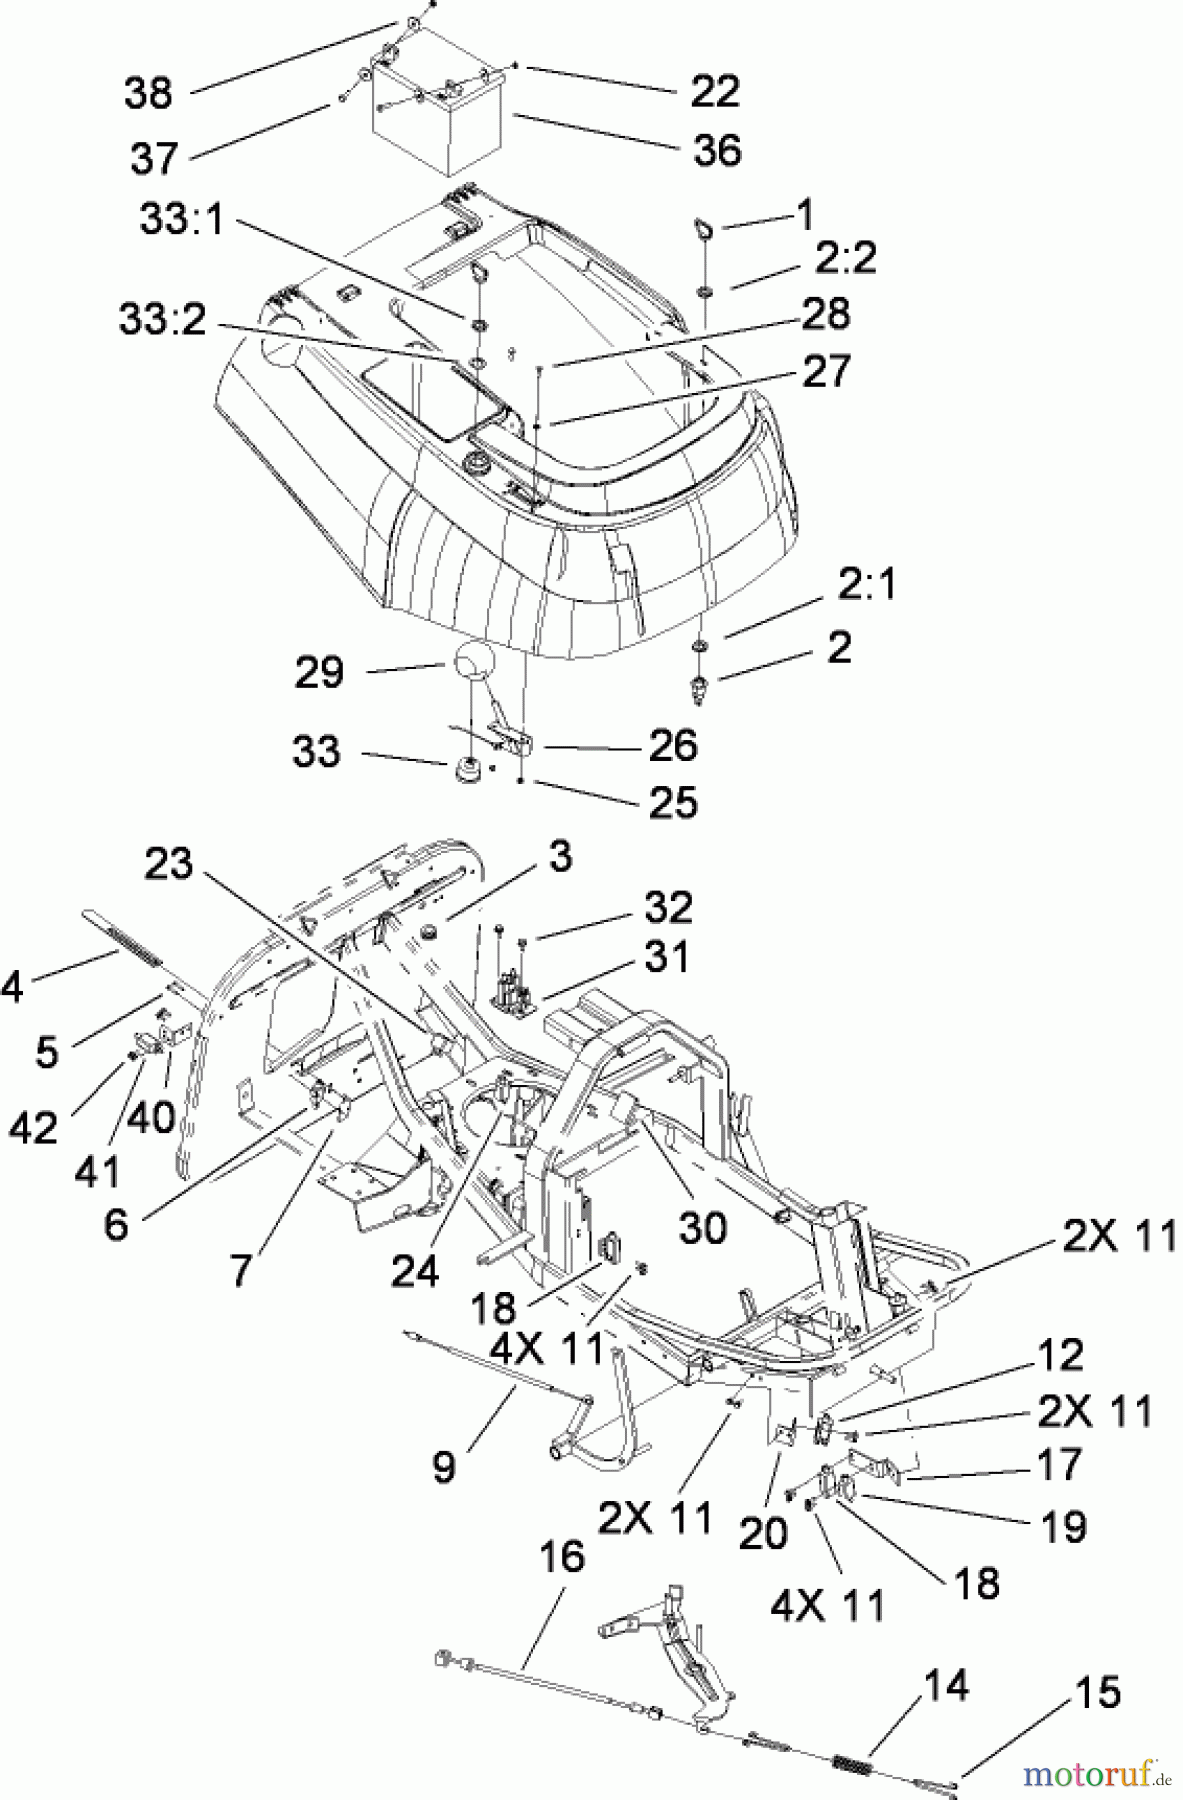  Toro Neu Mowers, Rear-Engine Rider 70186 (H132) - Toro H132 Rear-Engine Riding Mower, 2008 (270805636-280899434) ELECTRICAL ASSEMBLY